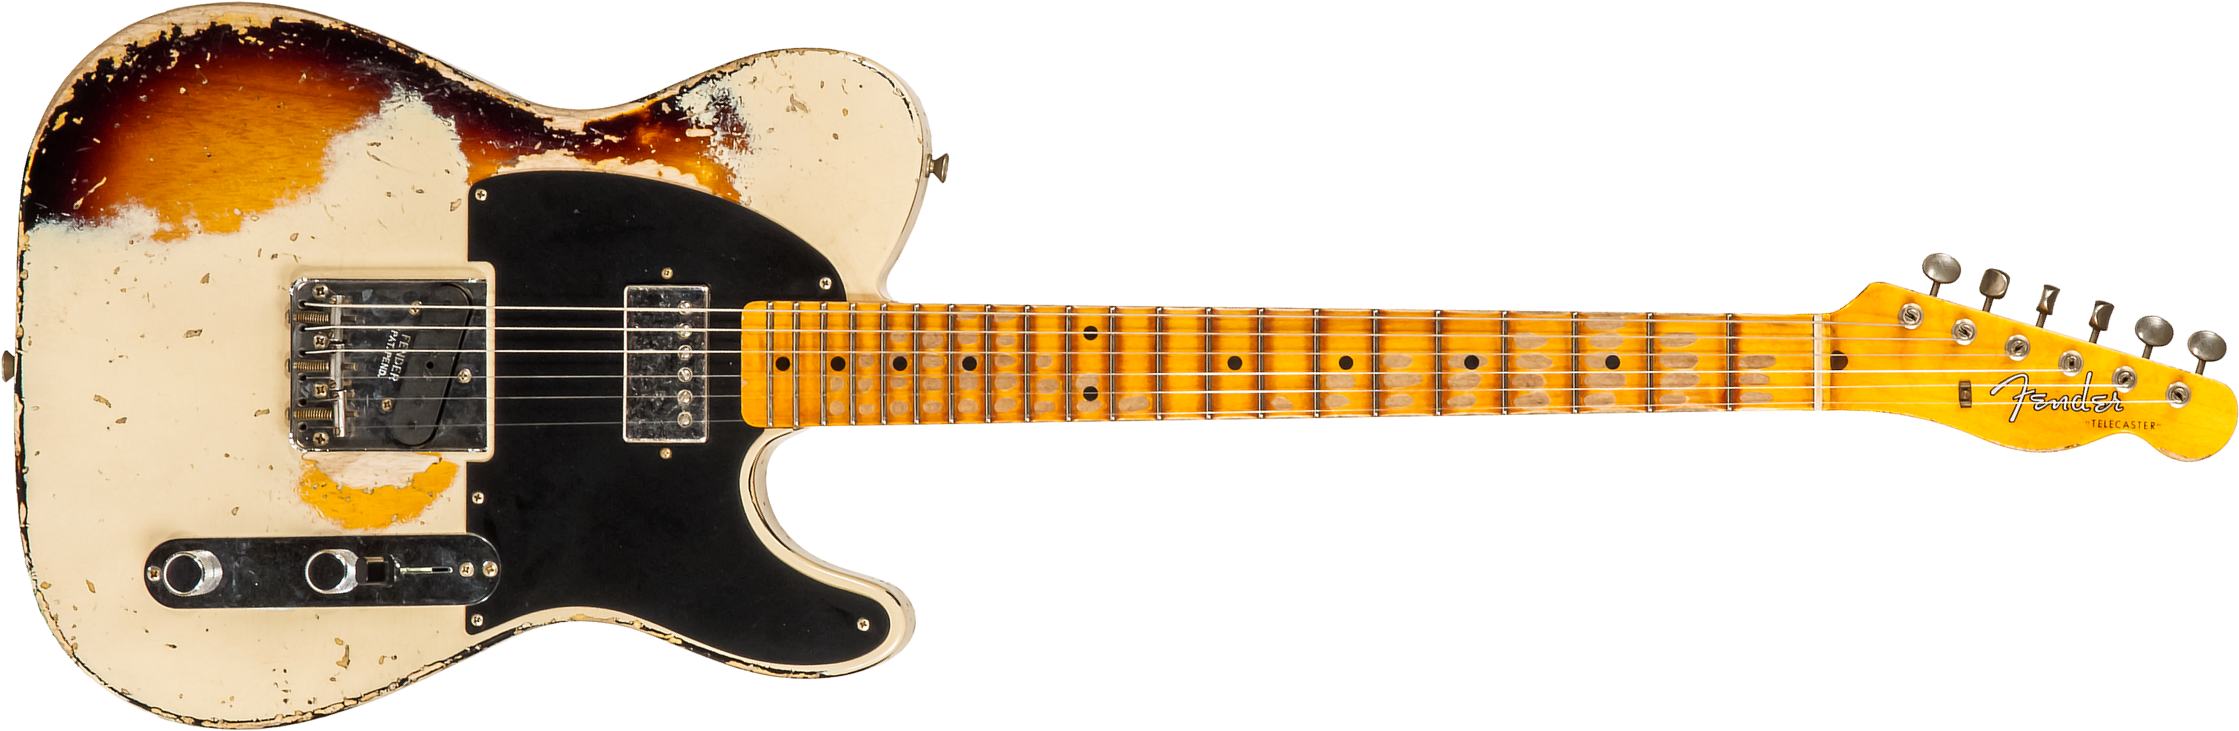 Fender Custom Shop Tele 1957 Sh Ht Mn #r117579 - Heavy Relic Desert Sand Ov. Sunburst - Guitarra eléctrica con forma de tel - Main picture